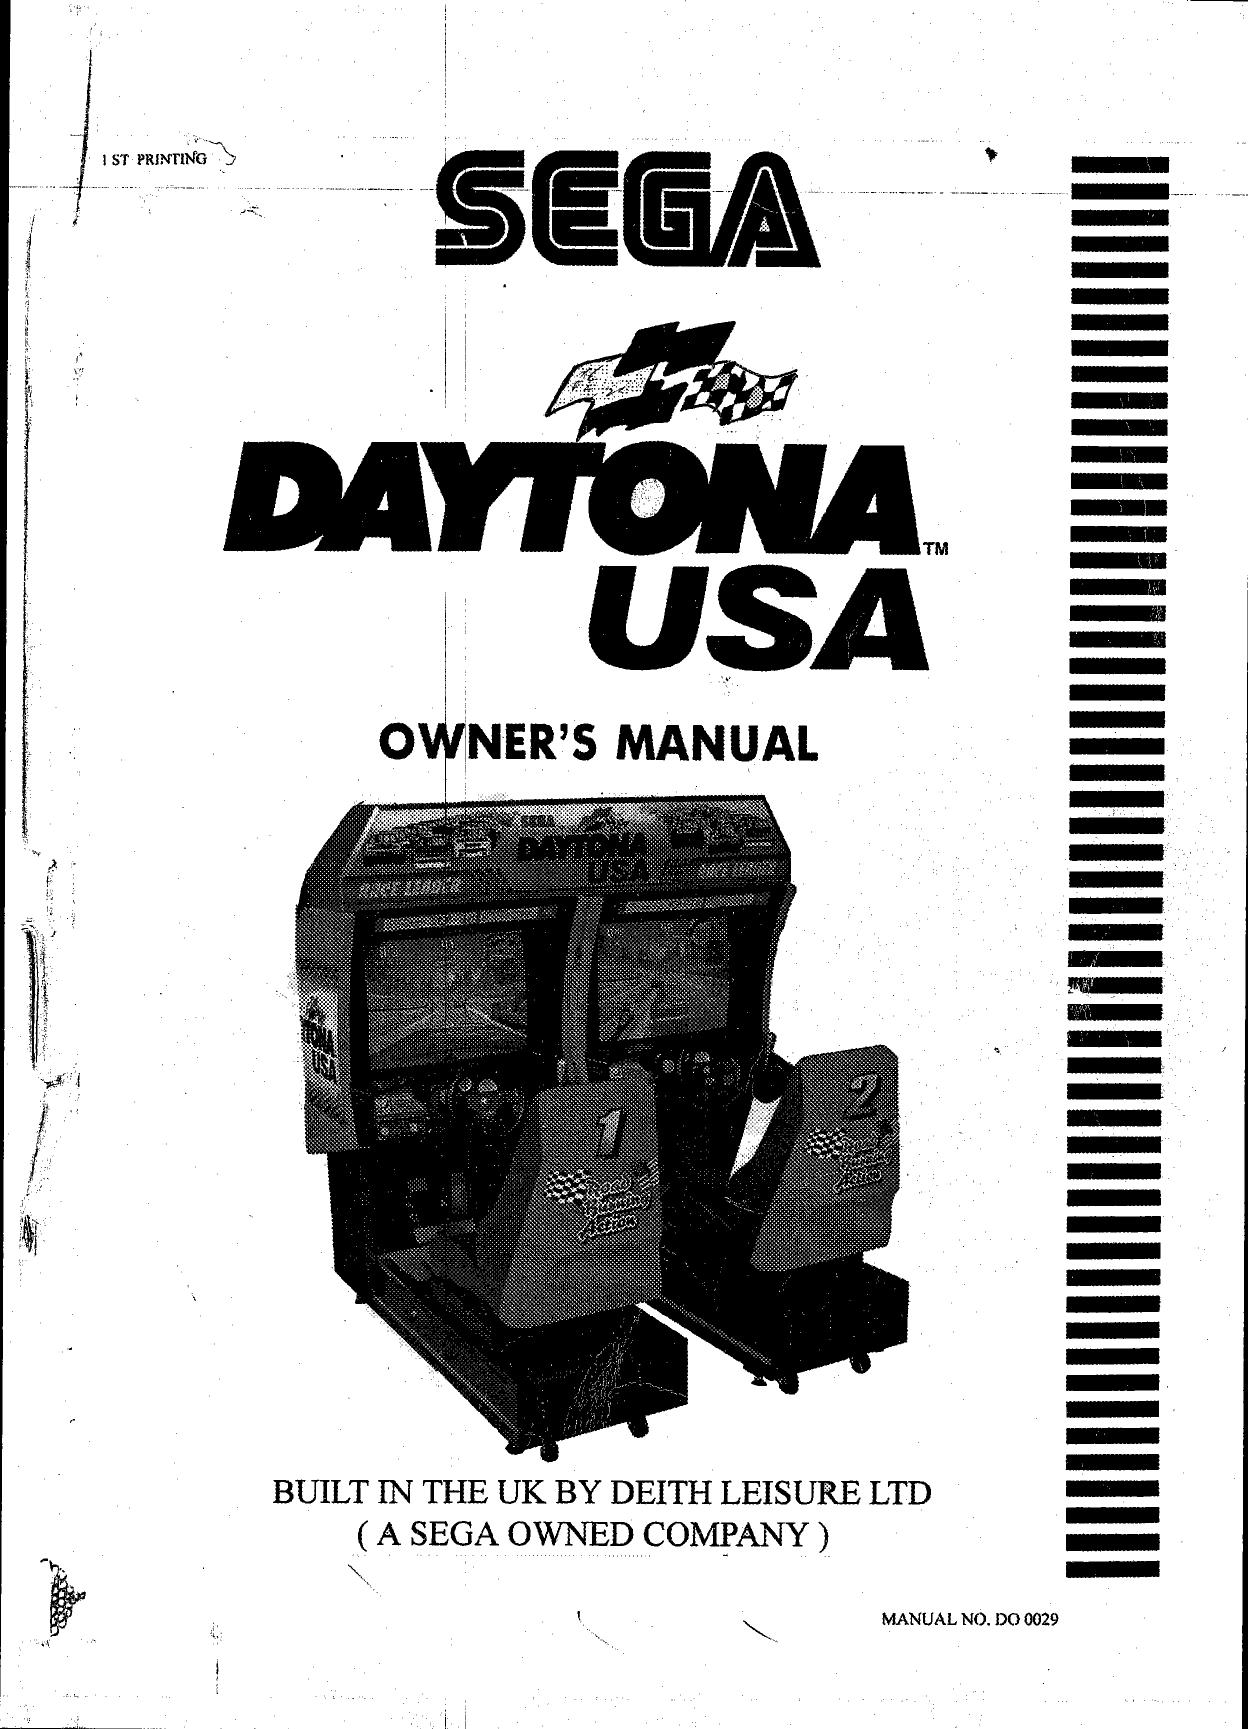 Daytona 1 USA